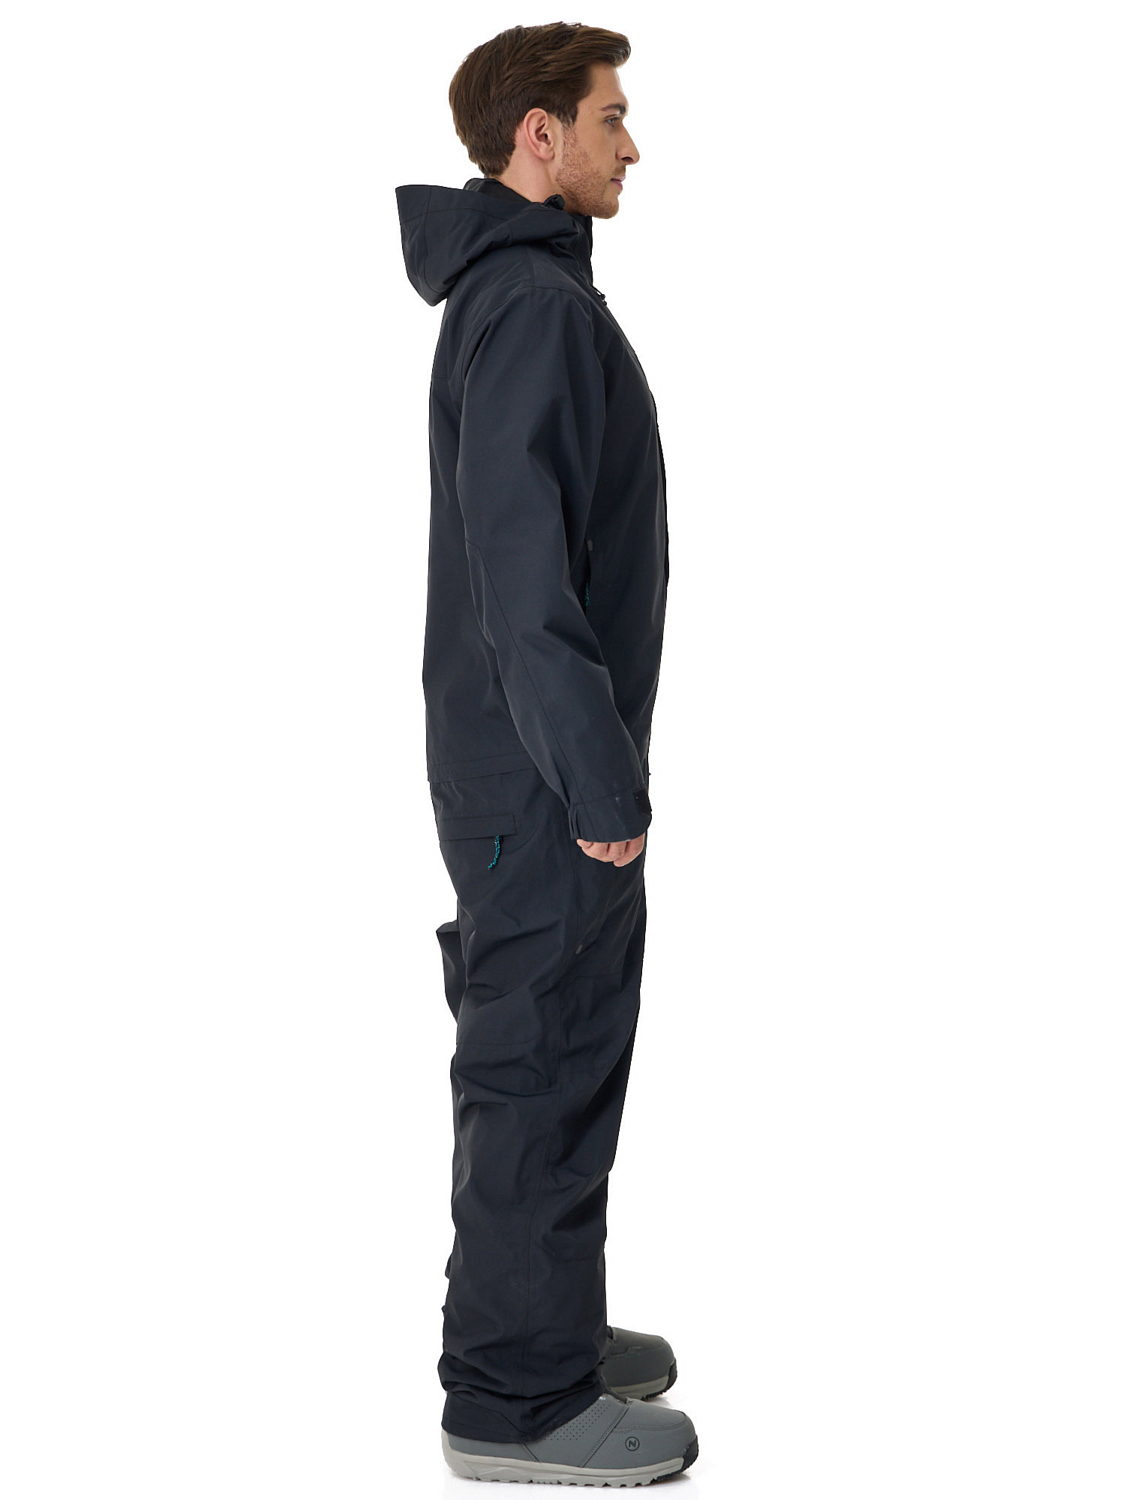 Комбинезон сноубордический AIRBLASTER Beast Suit Black